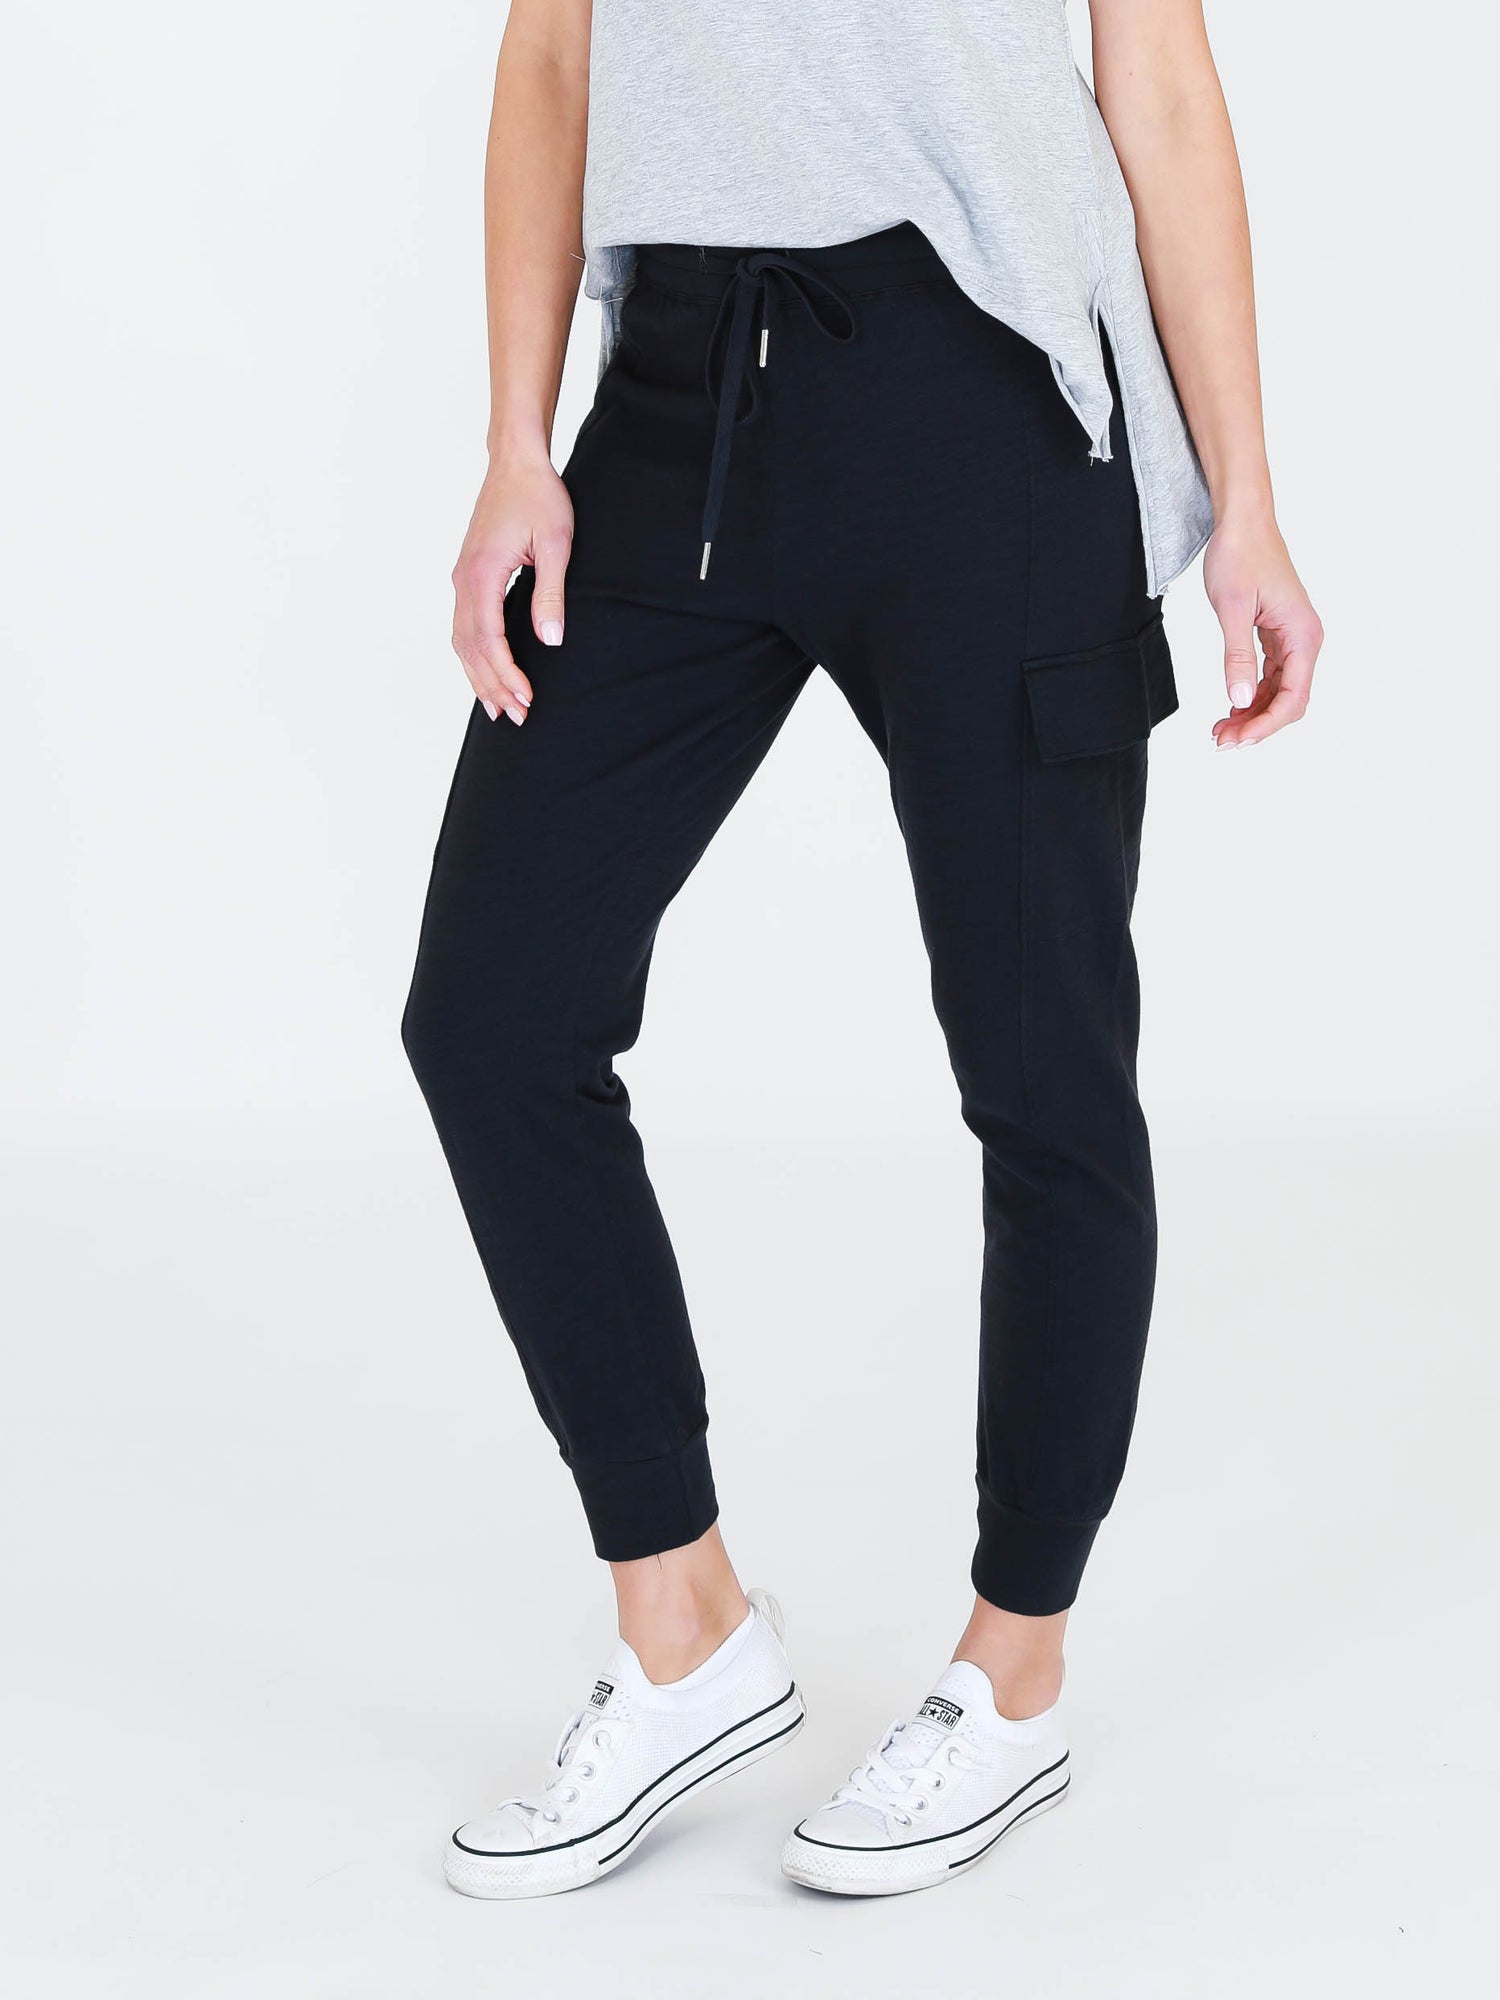 Old Navy Women's Black Sweatpants Jogger White Side Stripe Size